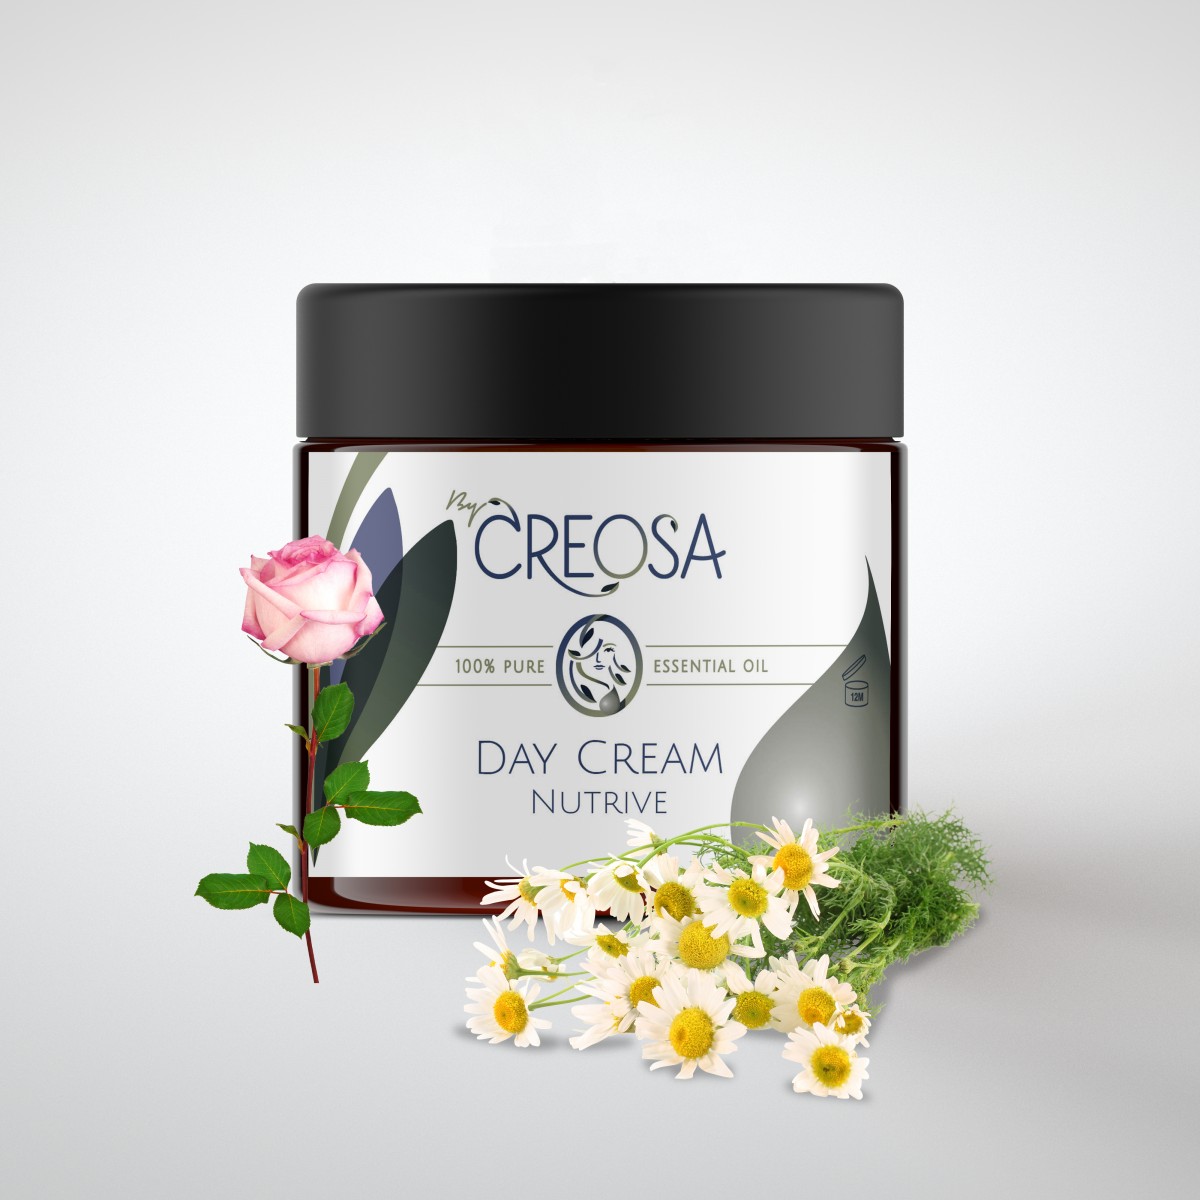 By Creosa day cream nutritive